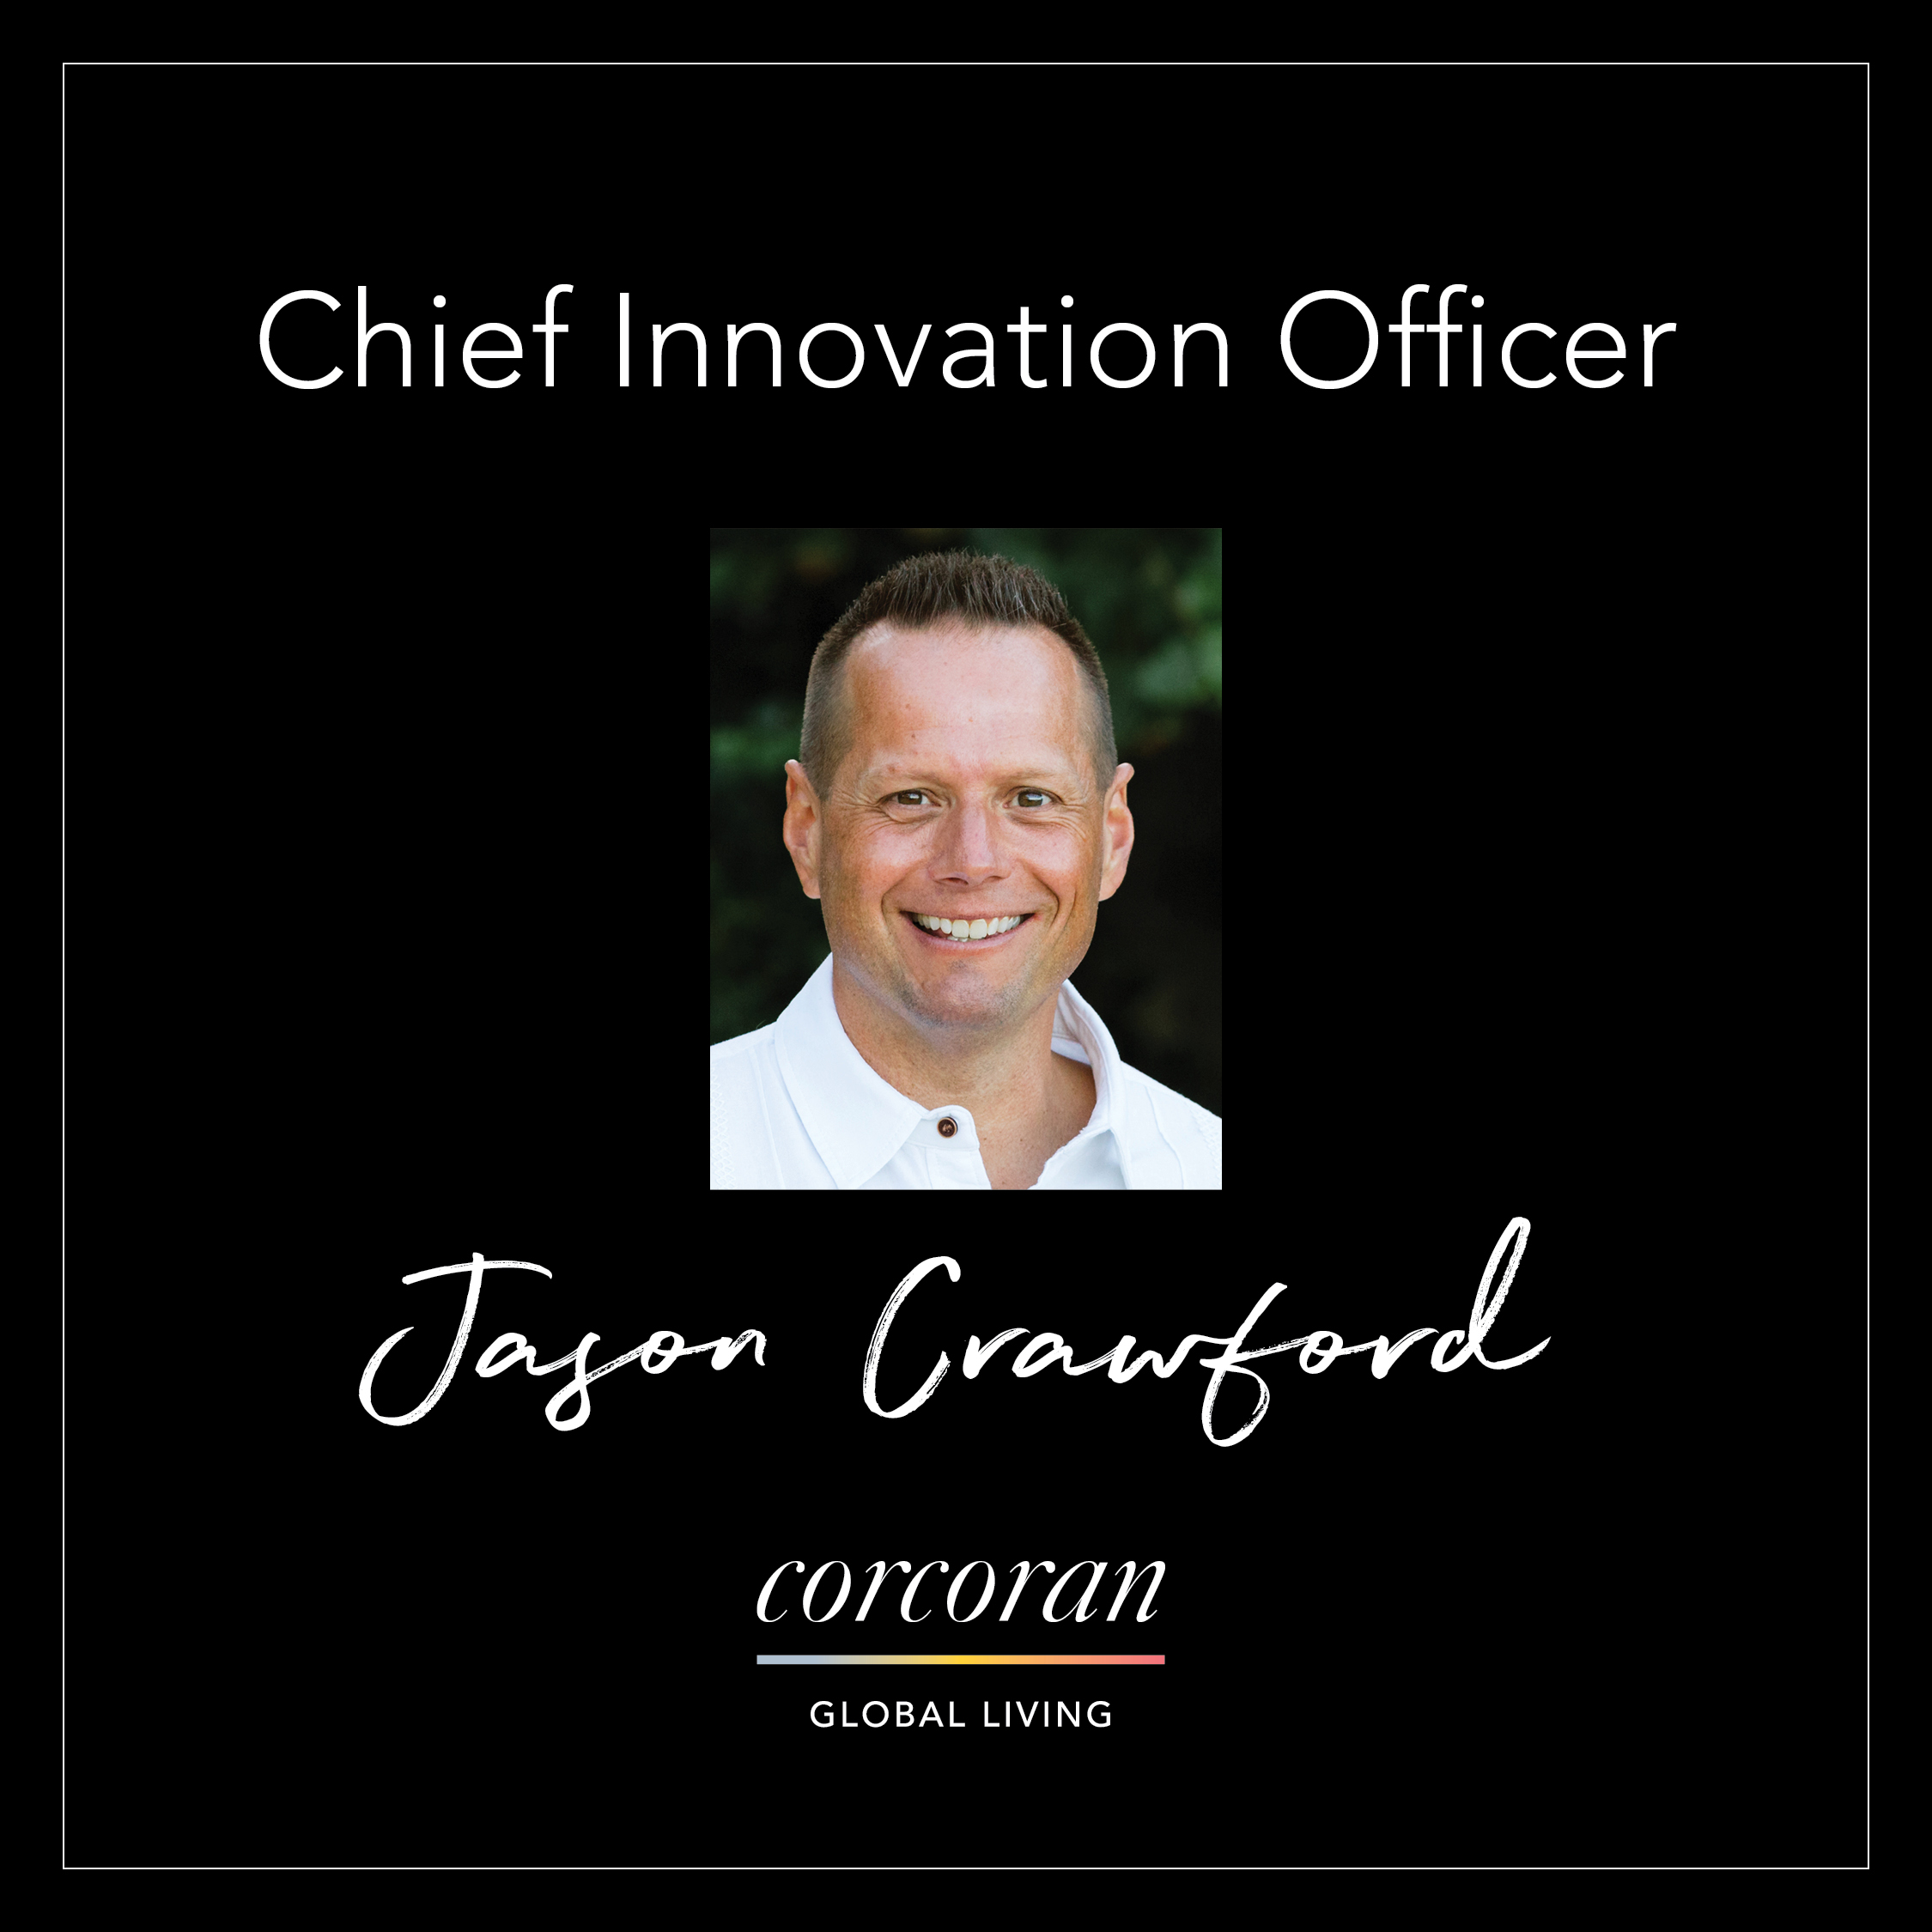 Jason Crawford, Chief Innovation Officer